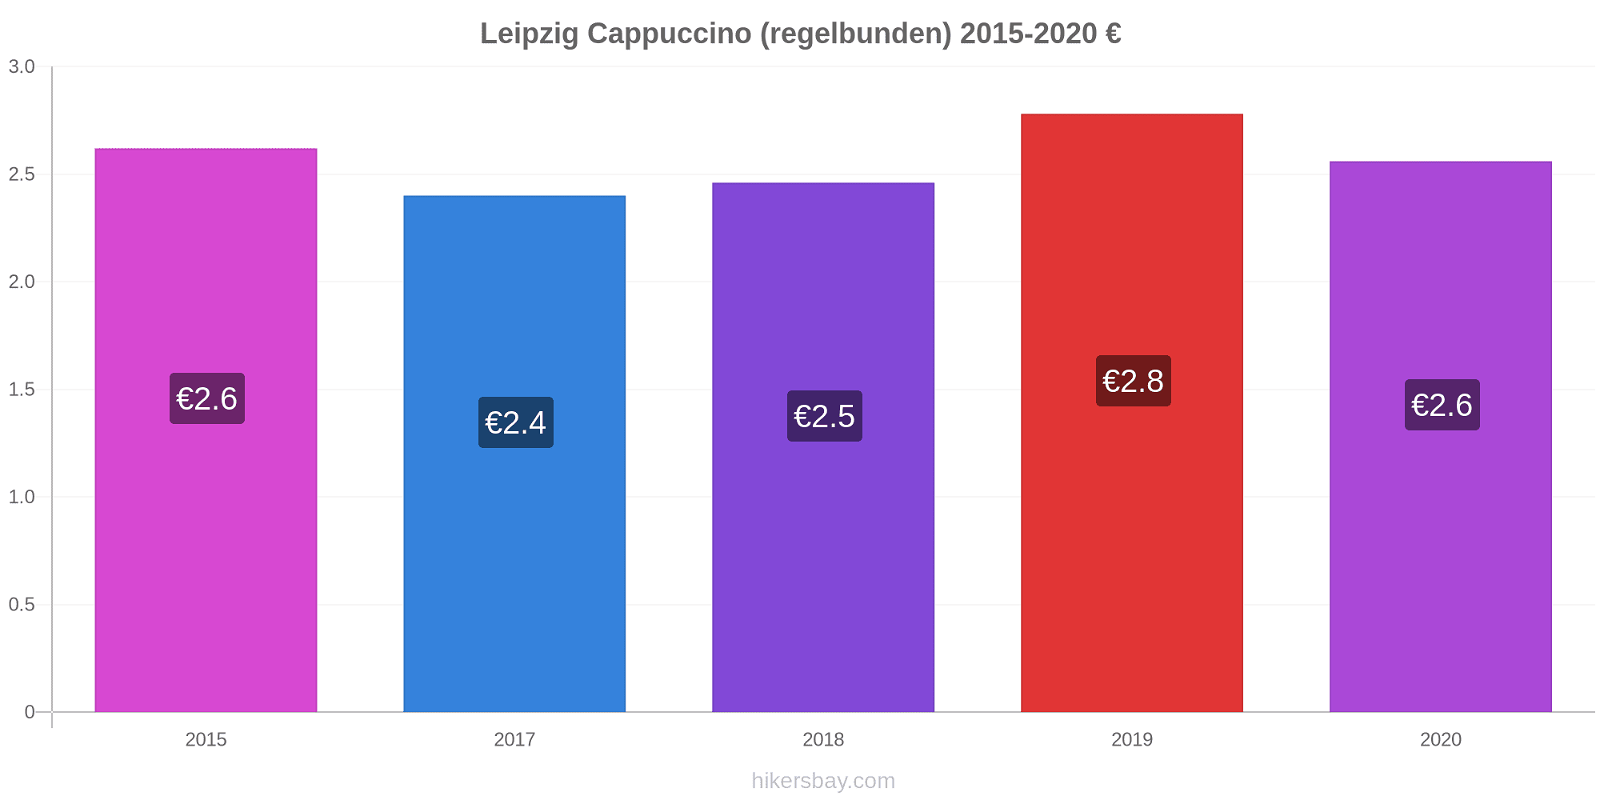 Leipzig prisförändringar Cappuccino (regelbunden) hikersbay.com